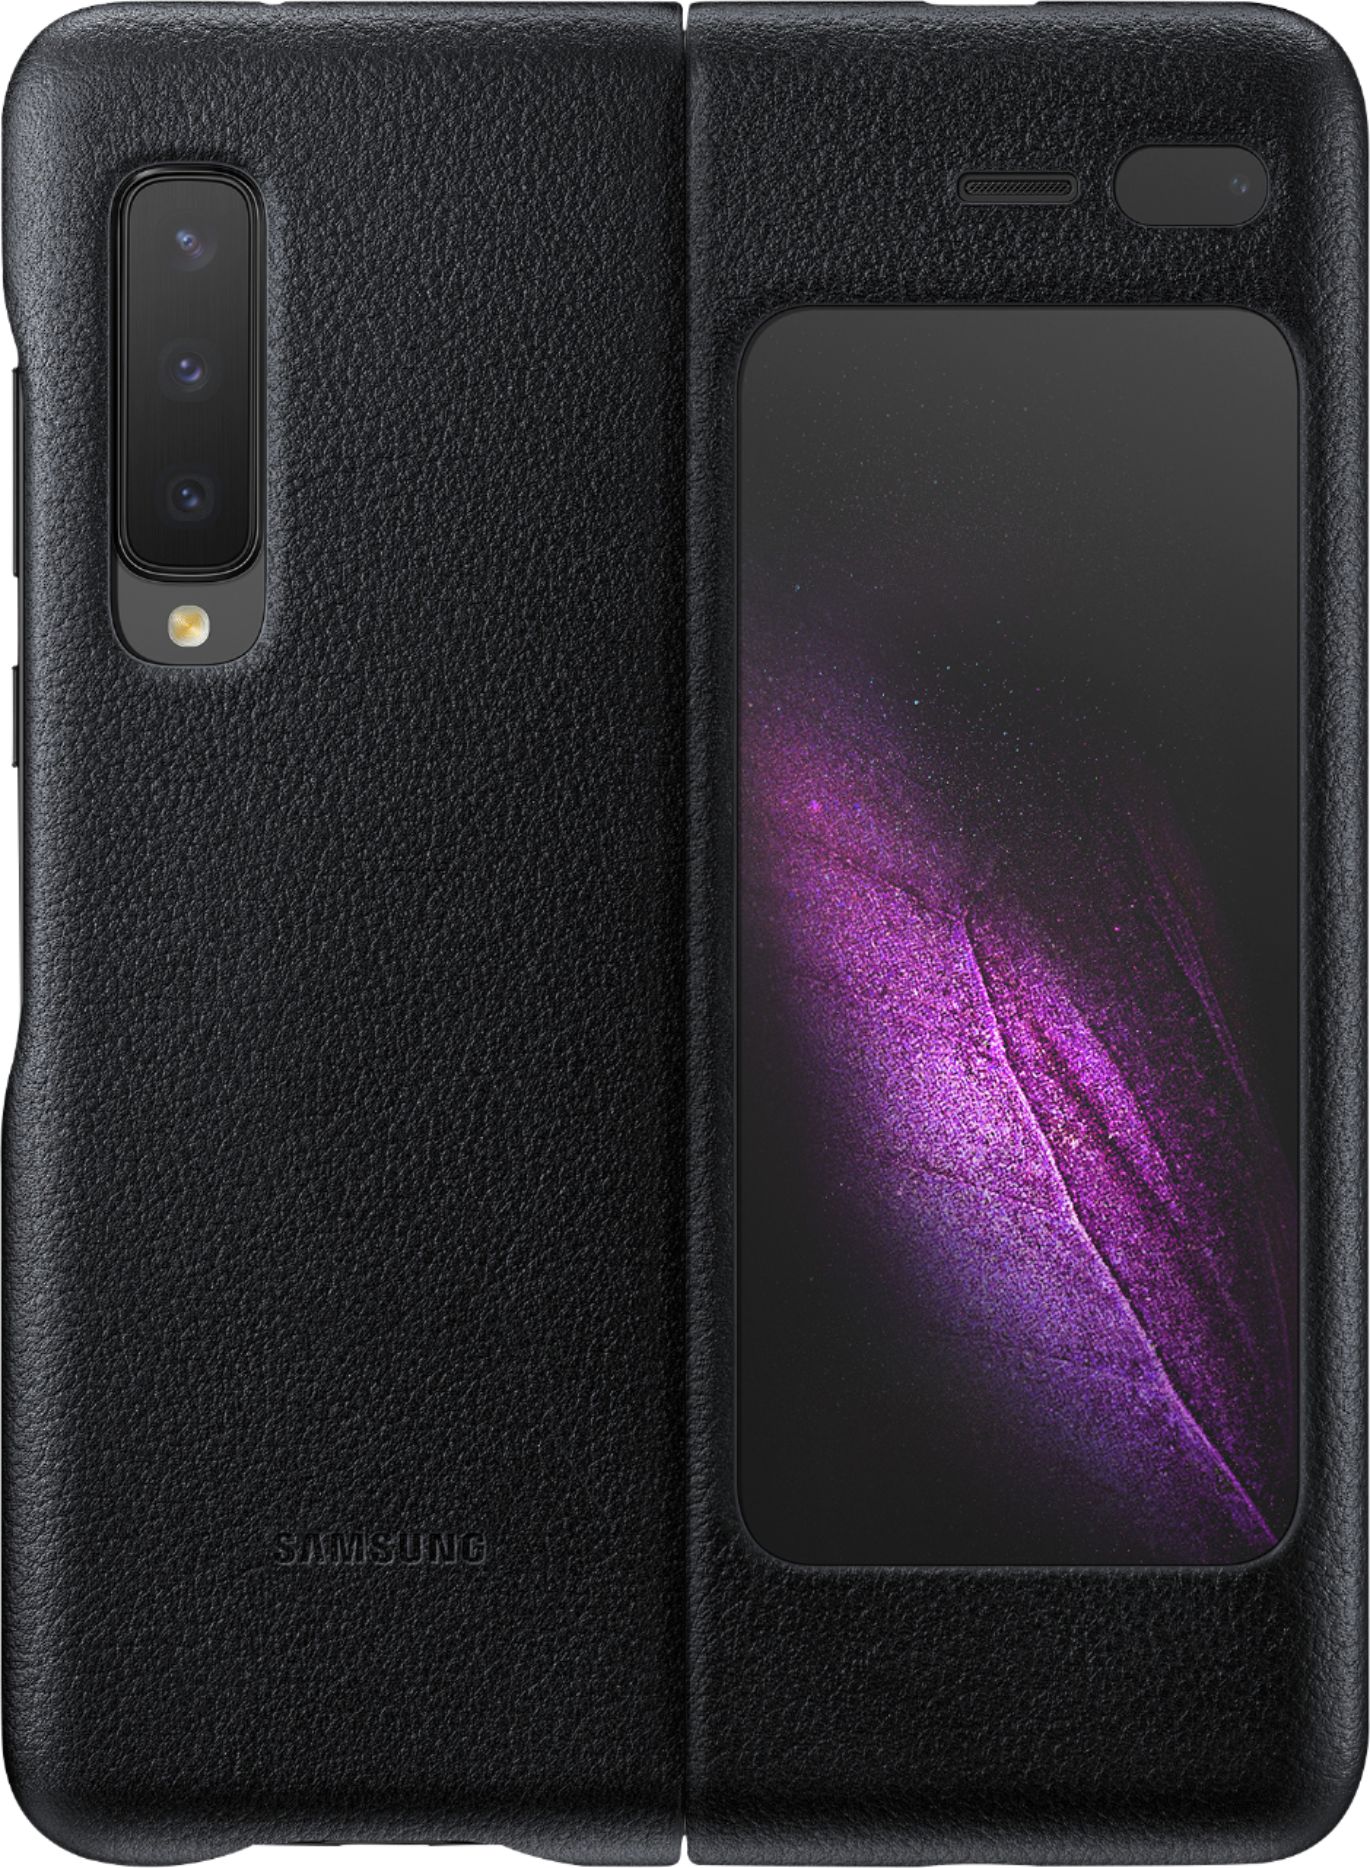 Buiten adem transactie Beugel Back Cover Case for Samsung Galaxy Fold Black EF-VF900LBELUS - Best Buy